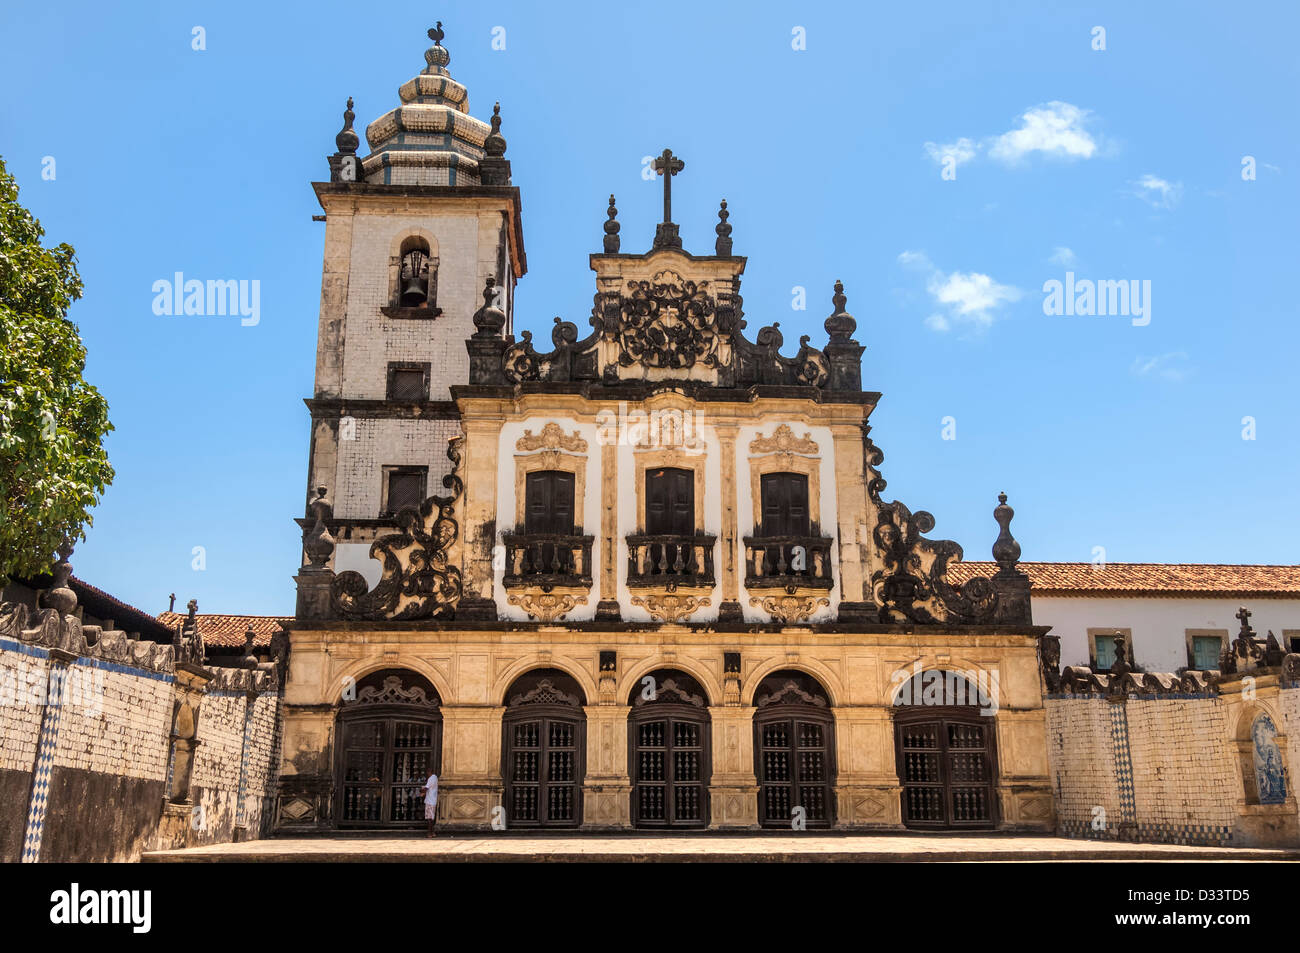 São Francisco Church in baroque style, City of João Pessoa, Paraiba state, Brazil Stock Photo